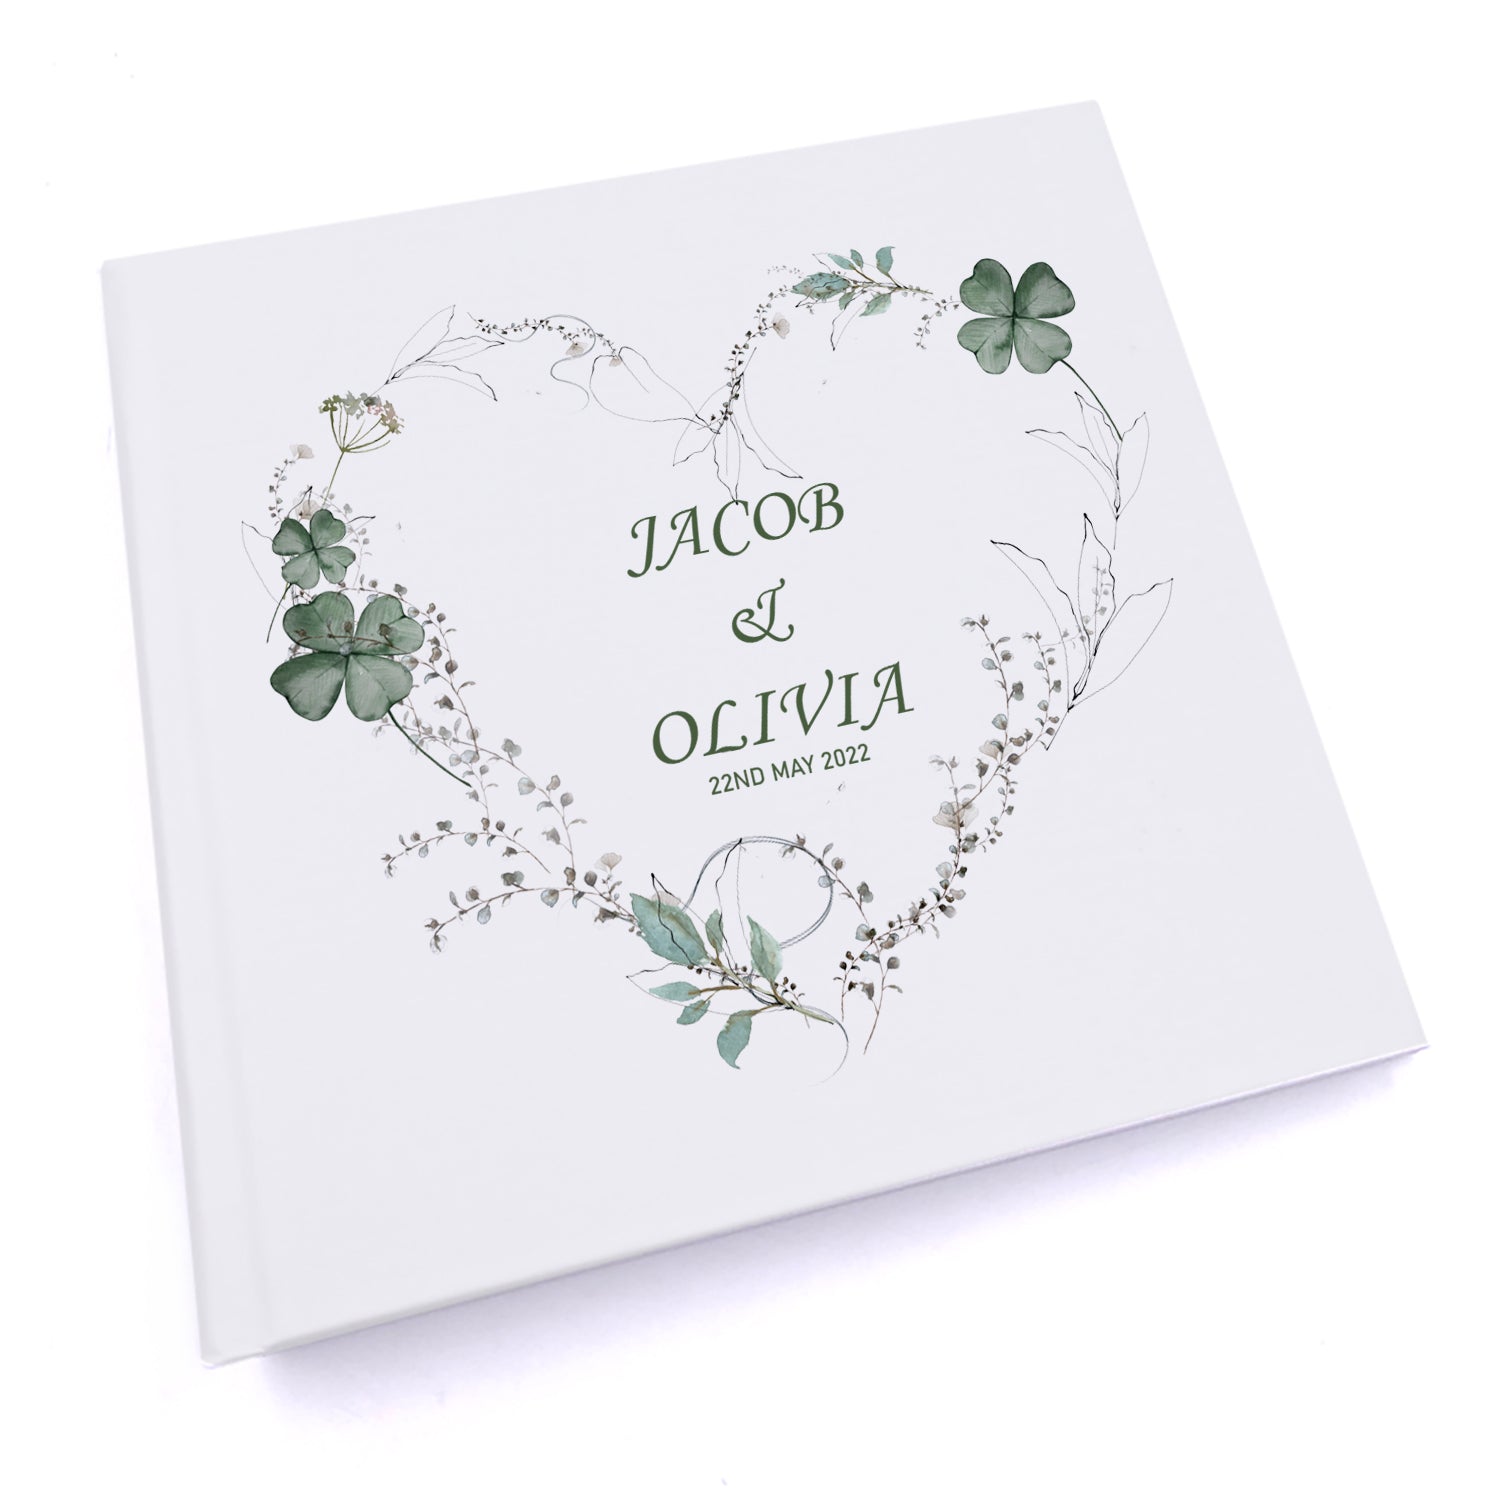 Personalised Wedding Photo Album Gift Green Clover Leaf Heart